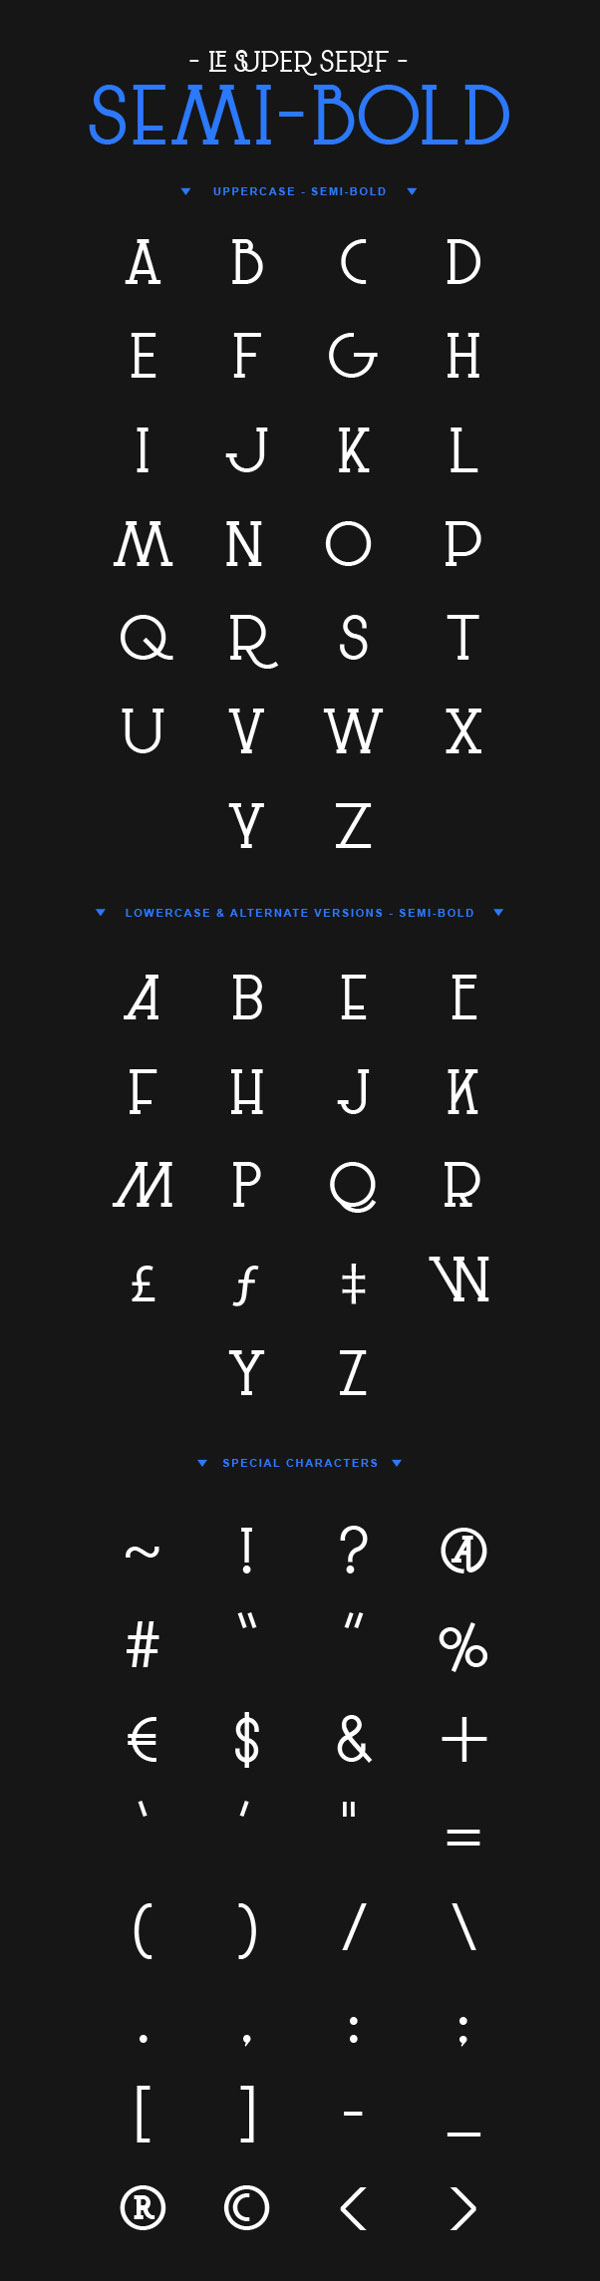 3.Le Super Serif font